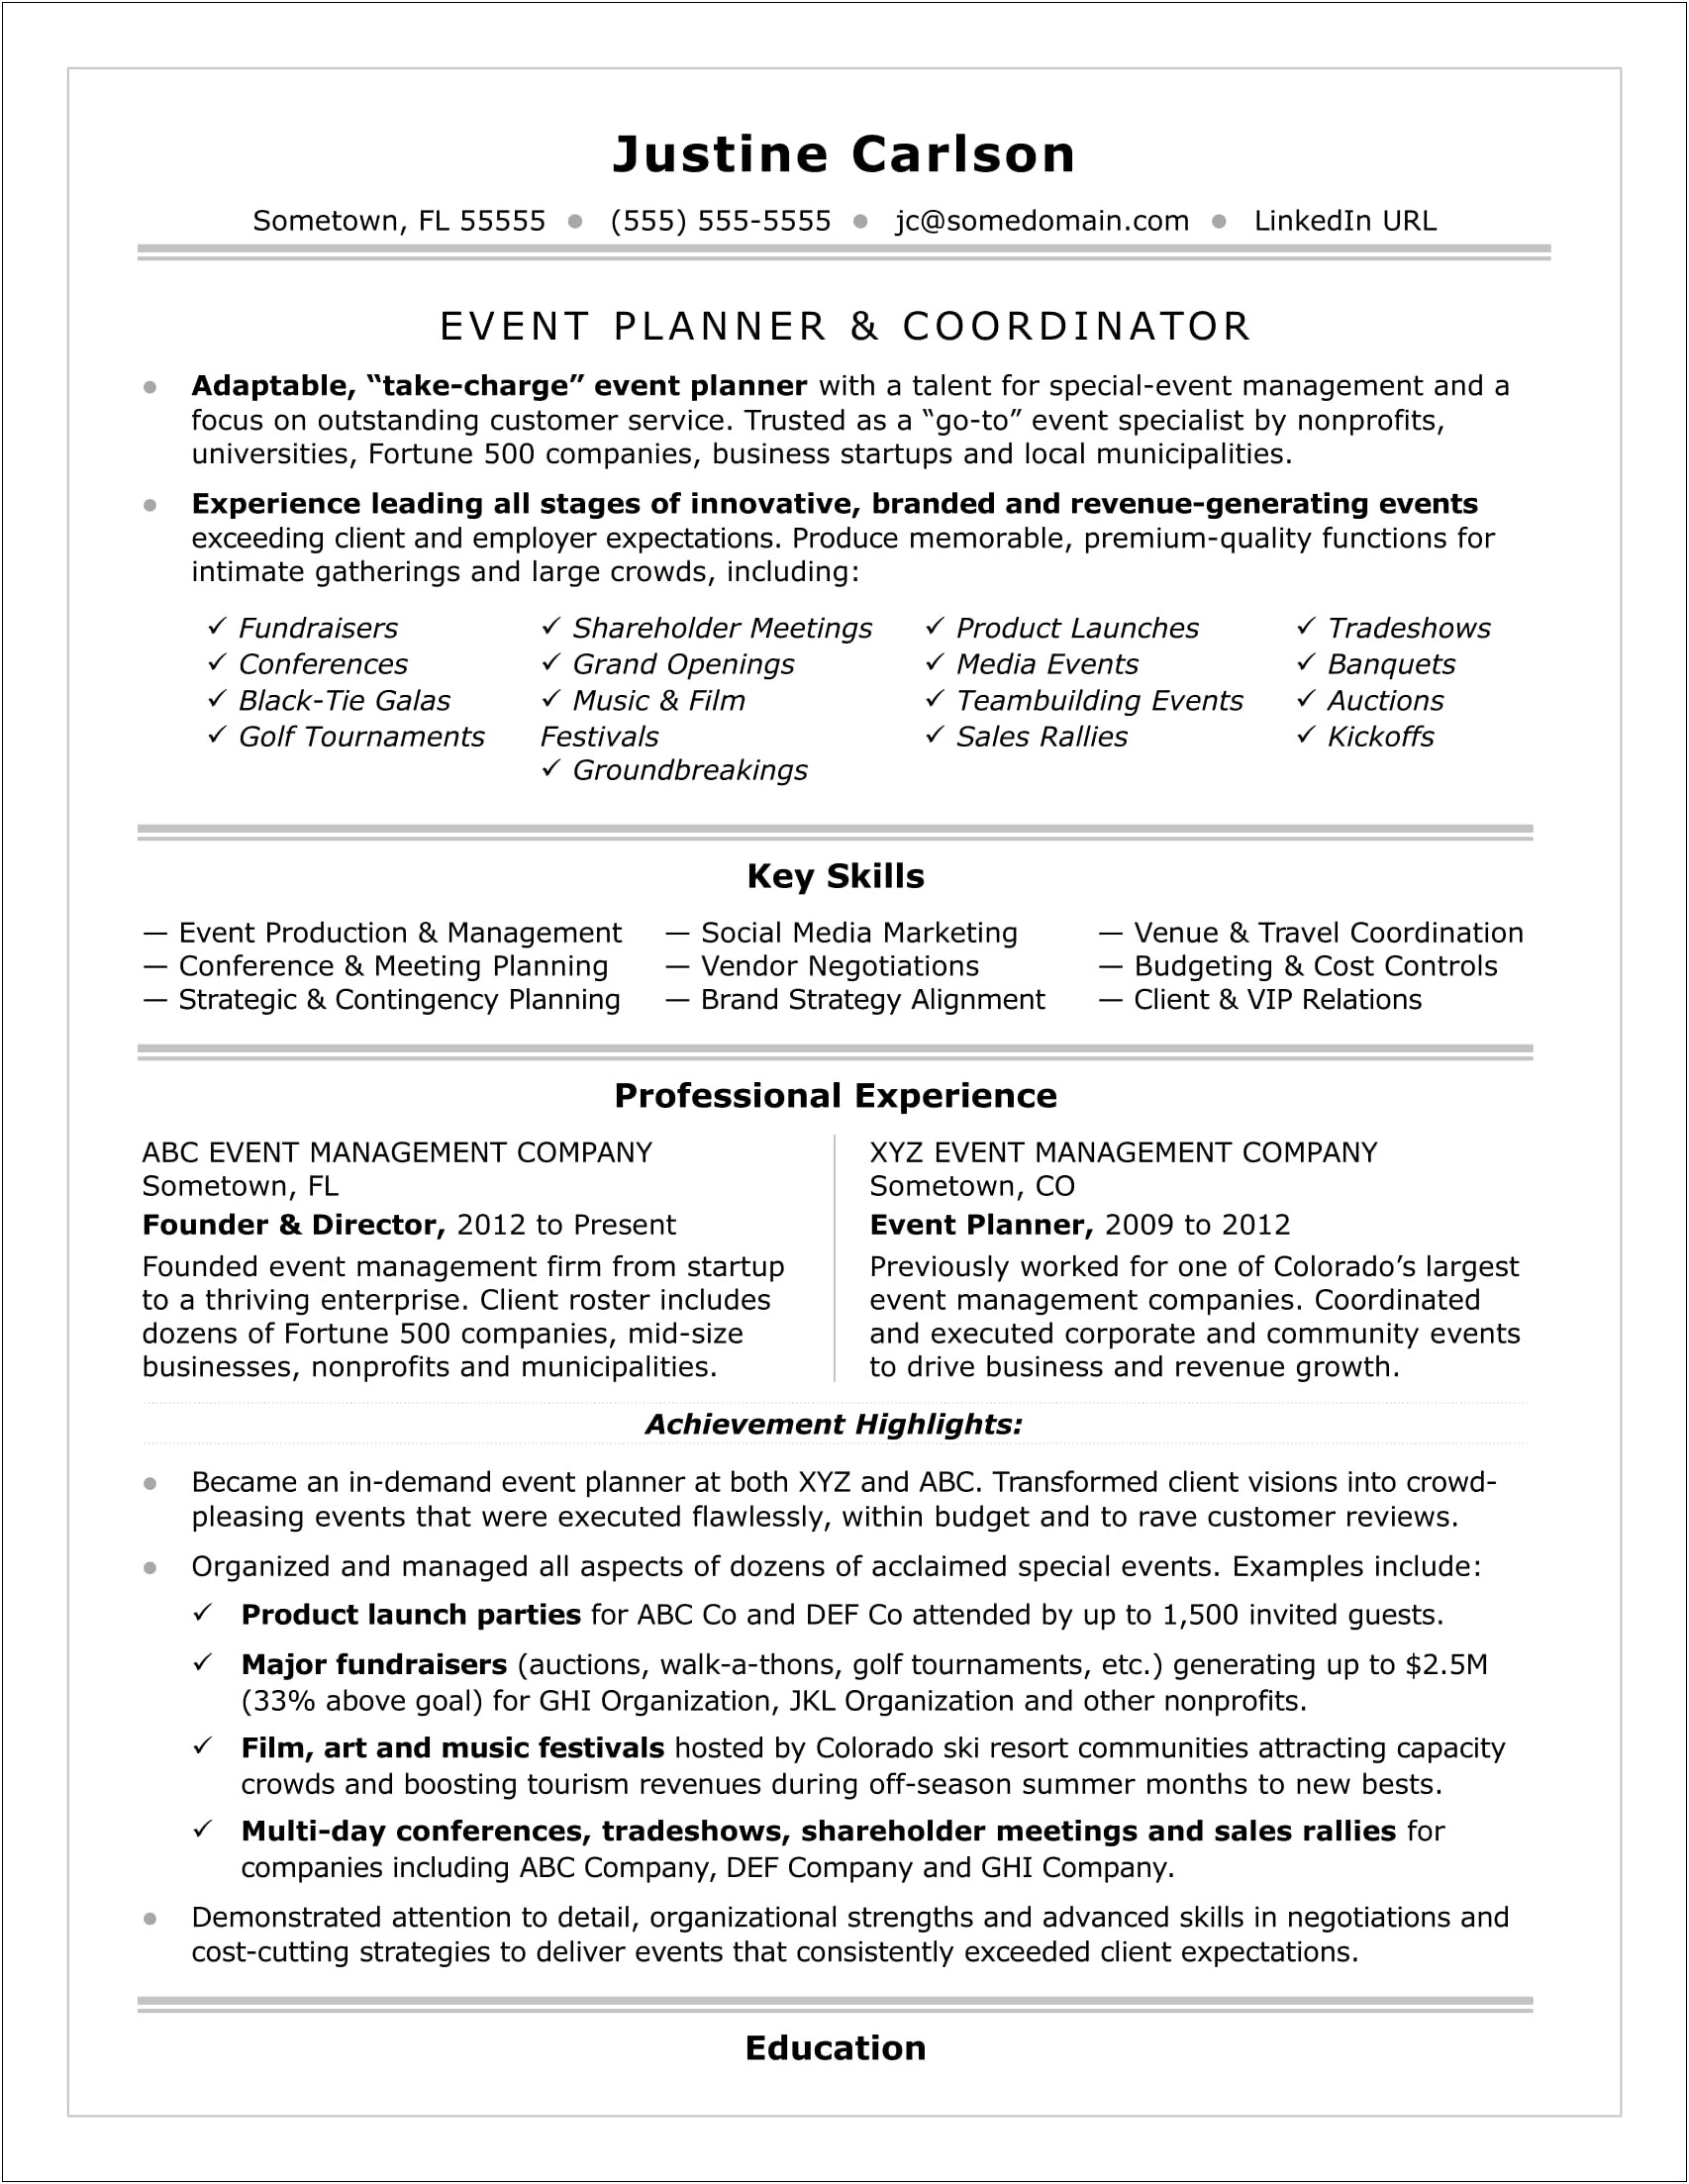 Resume Description For Founder Of Company